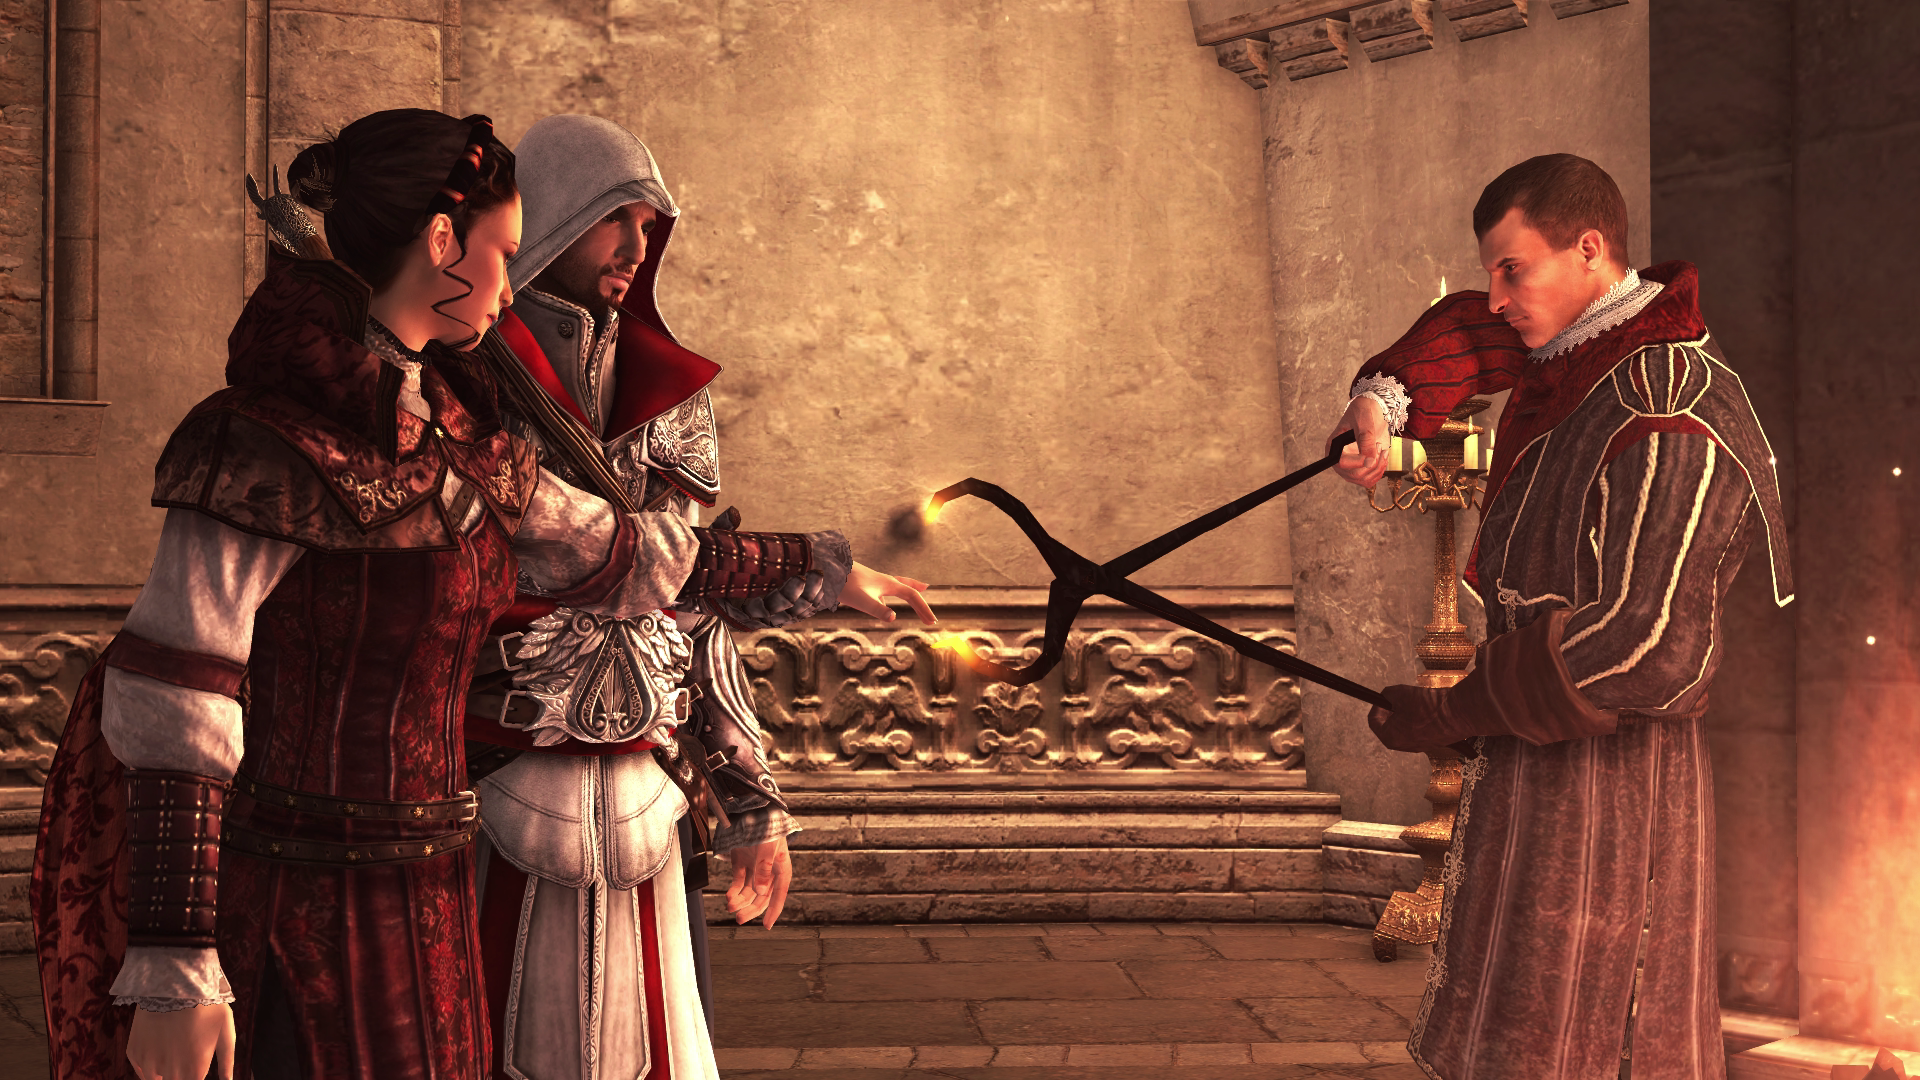 Kadar Al-Sayf, Assassin's Creed Wiki